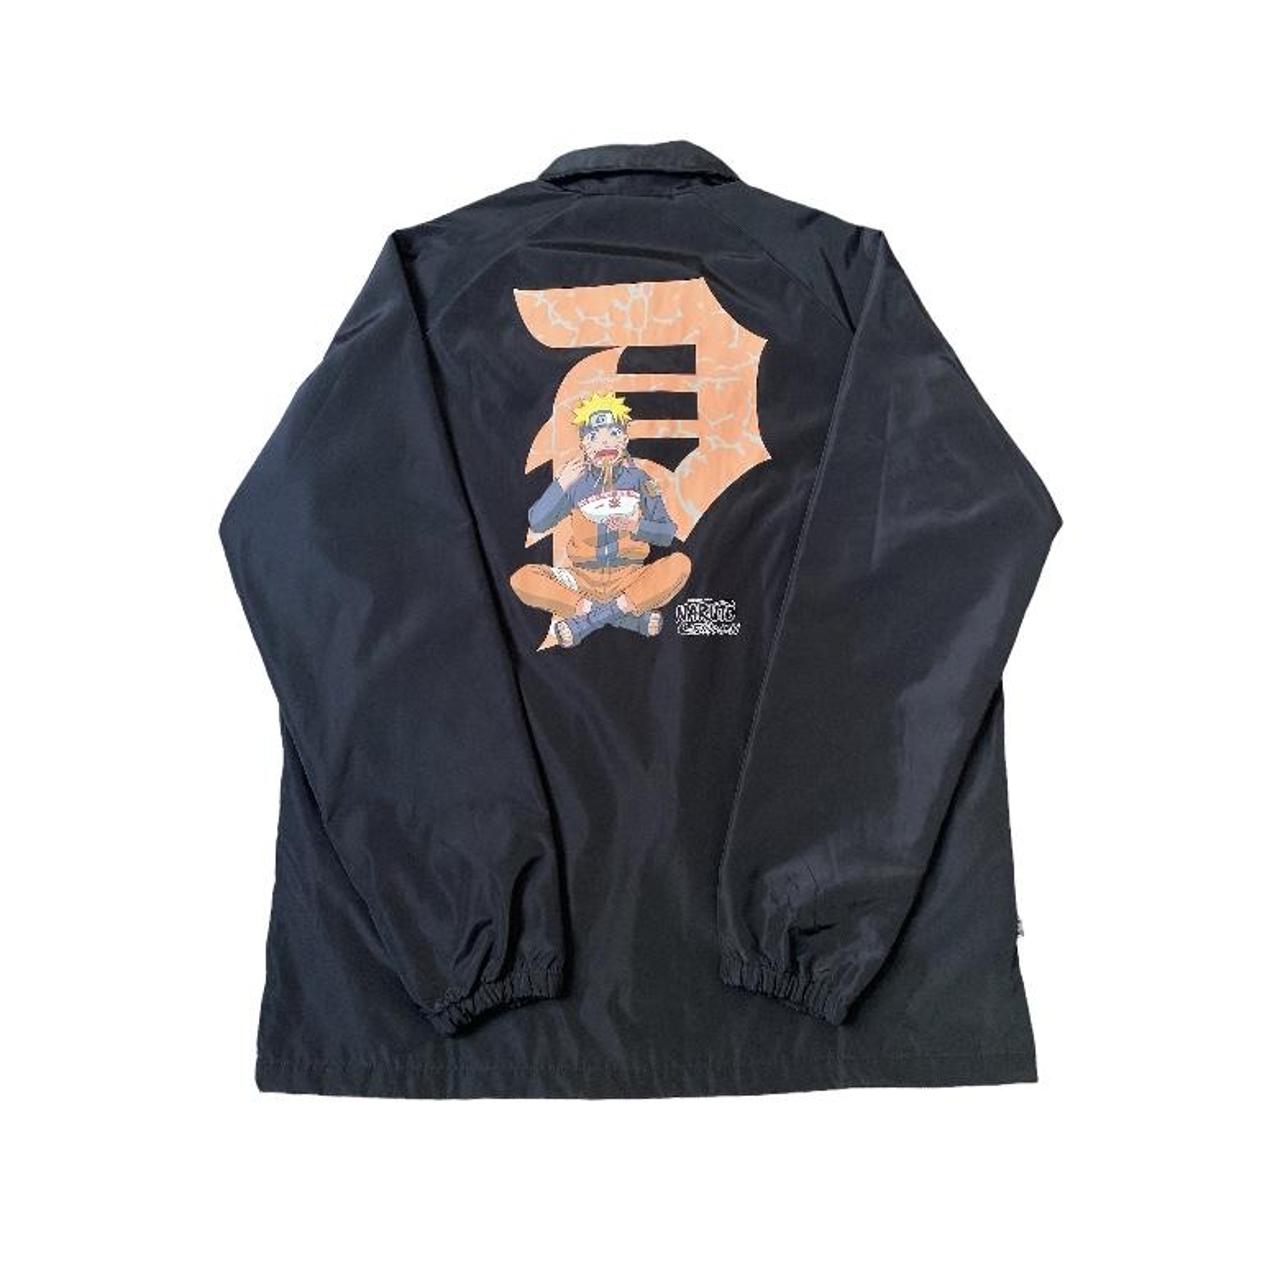 Primitive x Naruto Jacket, -100%...